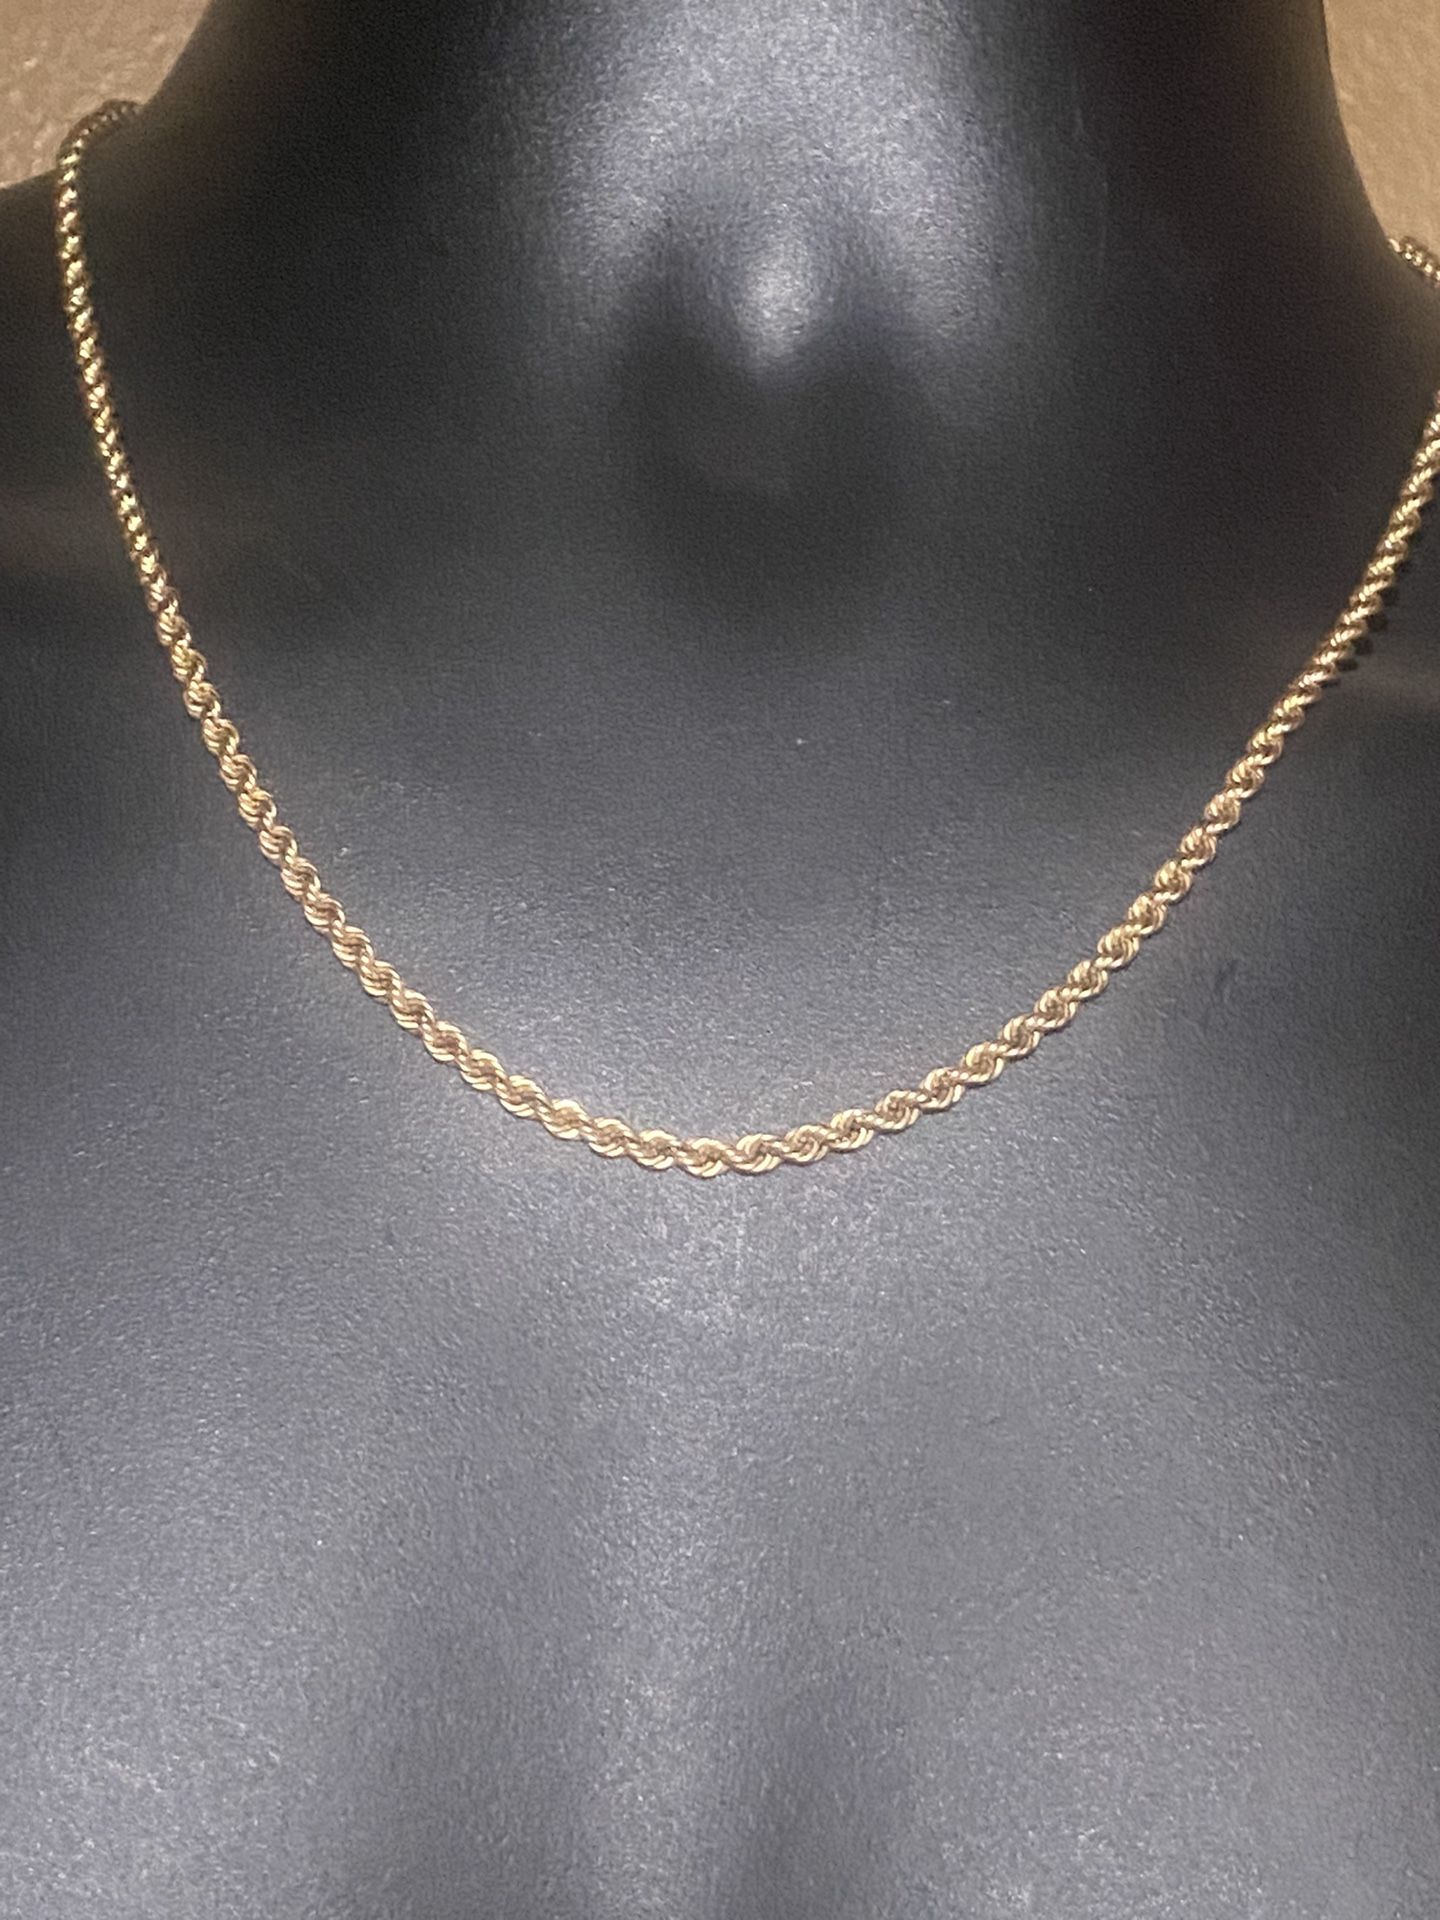 10K 20 inch 3.5 mm semi hollow diamond cut rope necklace 5.25 g